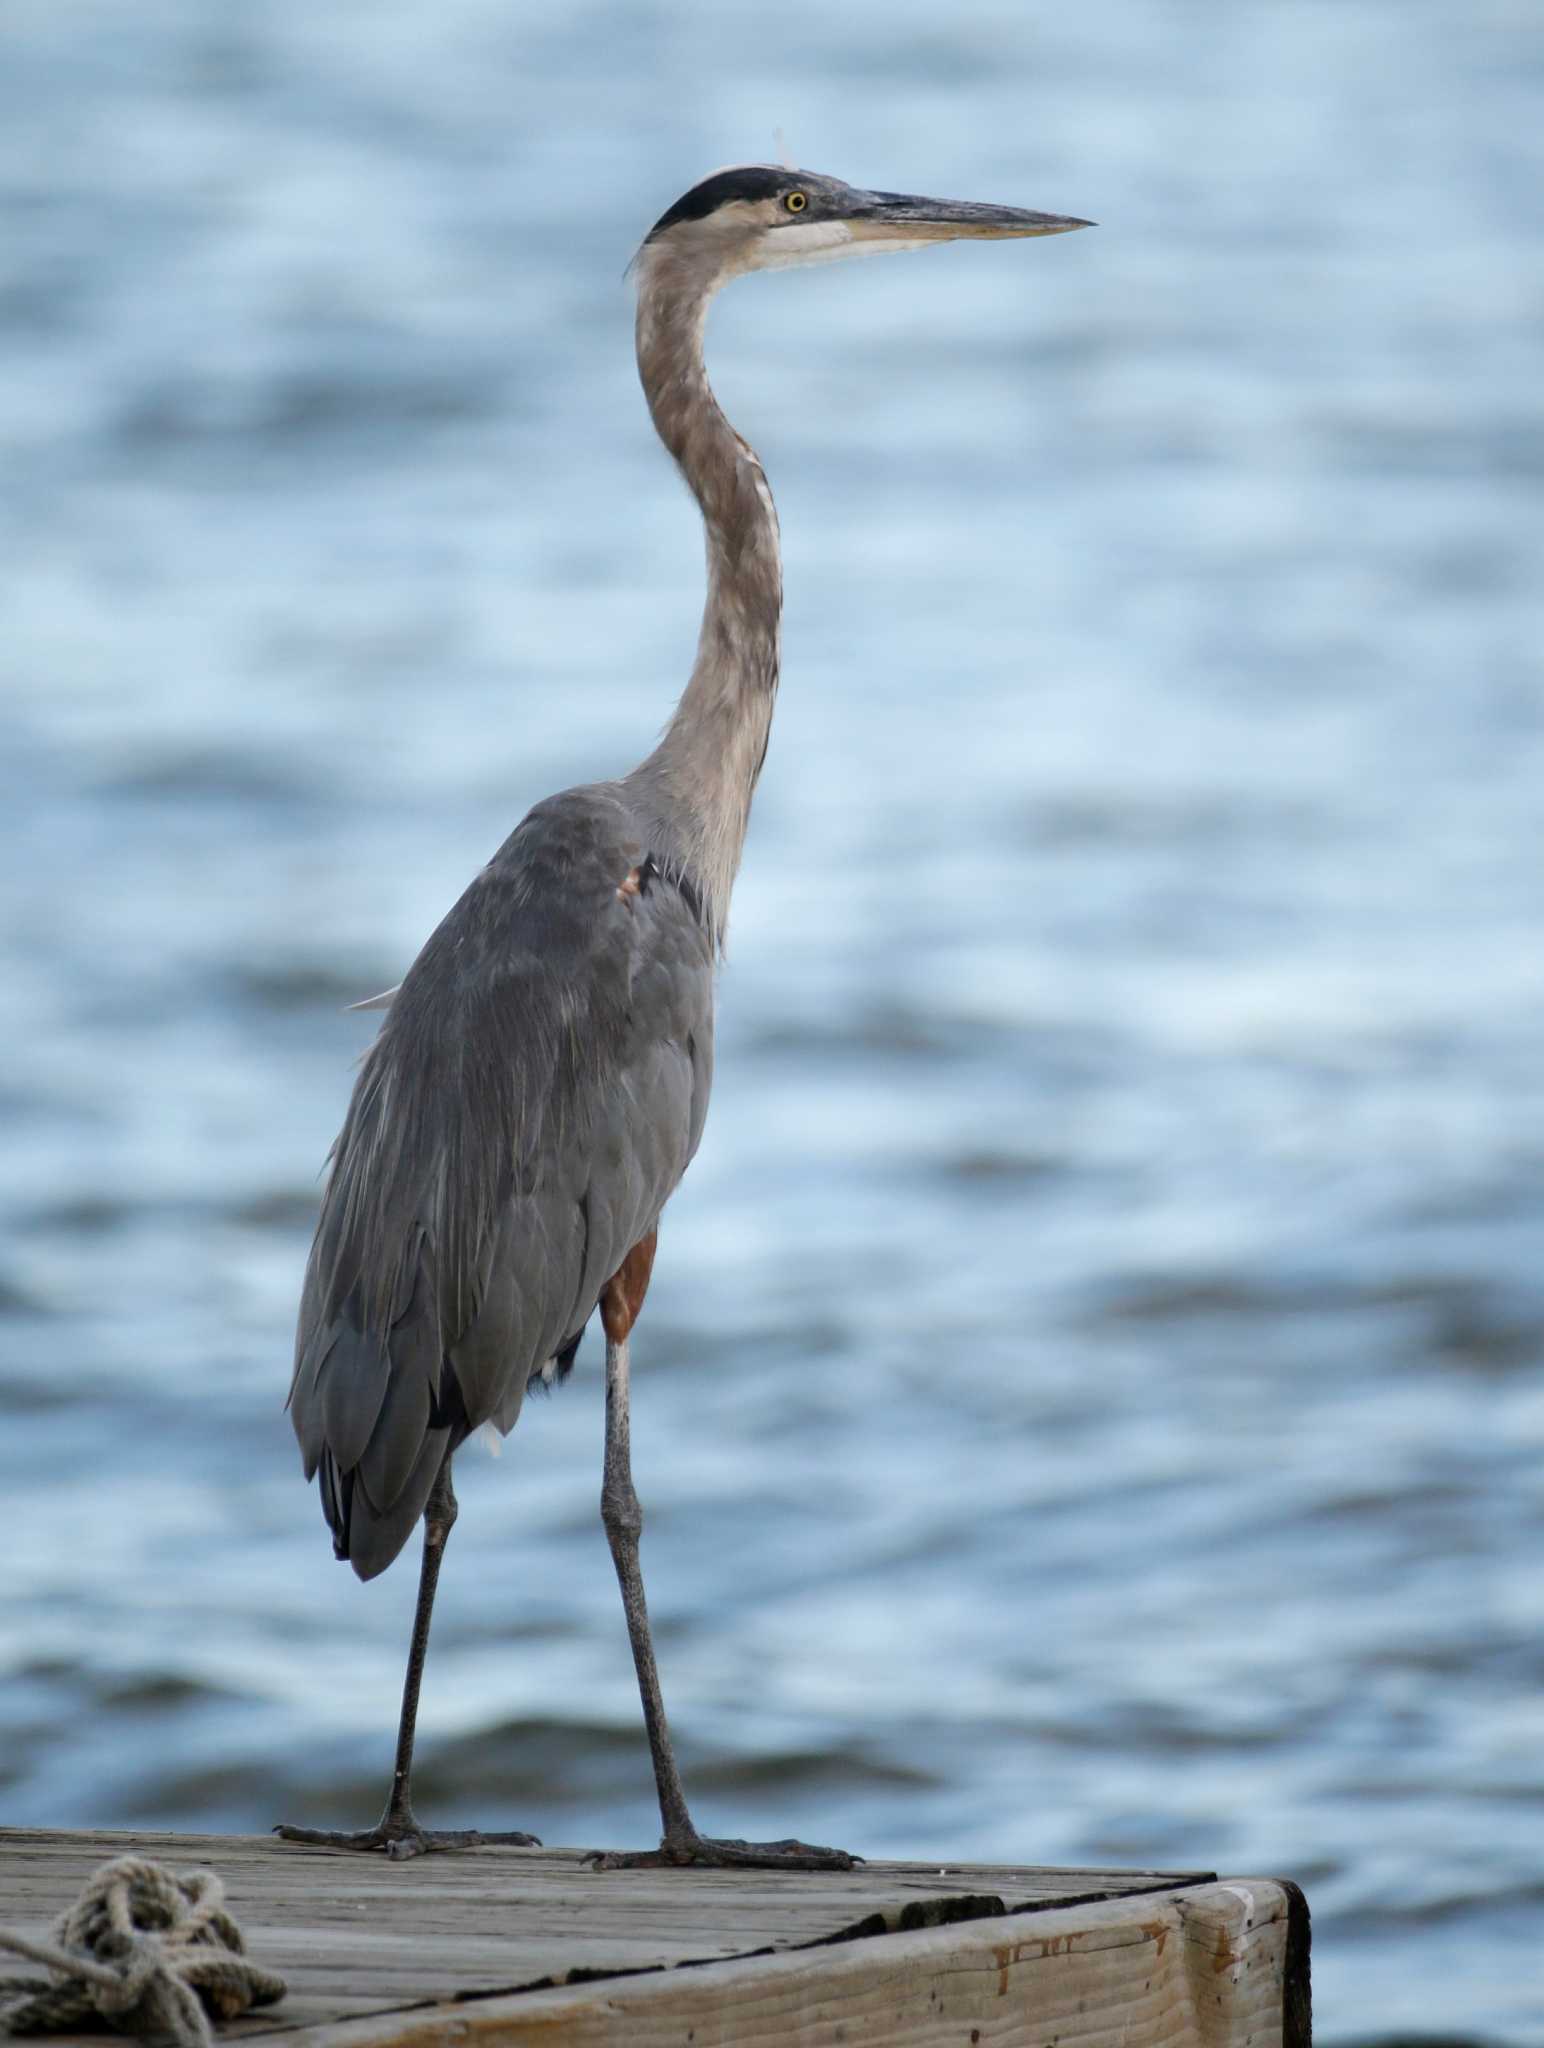 Erosion threatens bird habitat at Lake Conroe - Houston Chronicle1544 x 2048